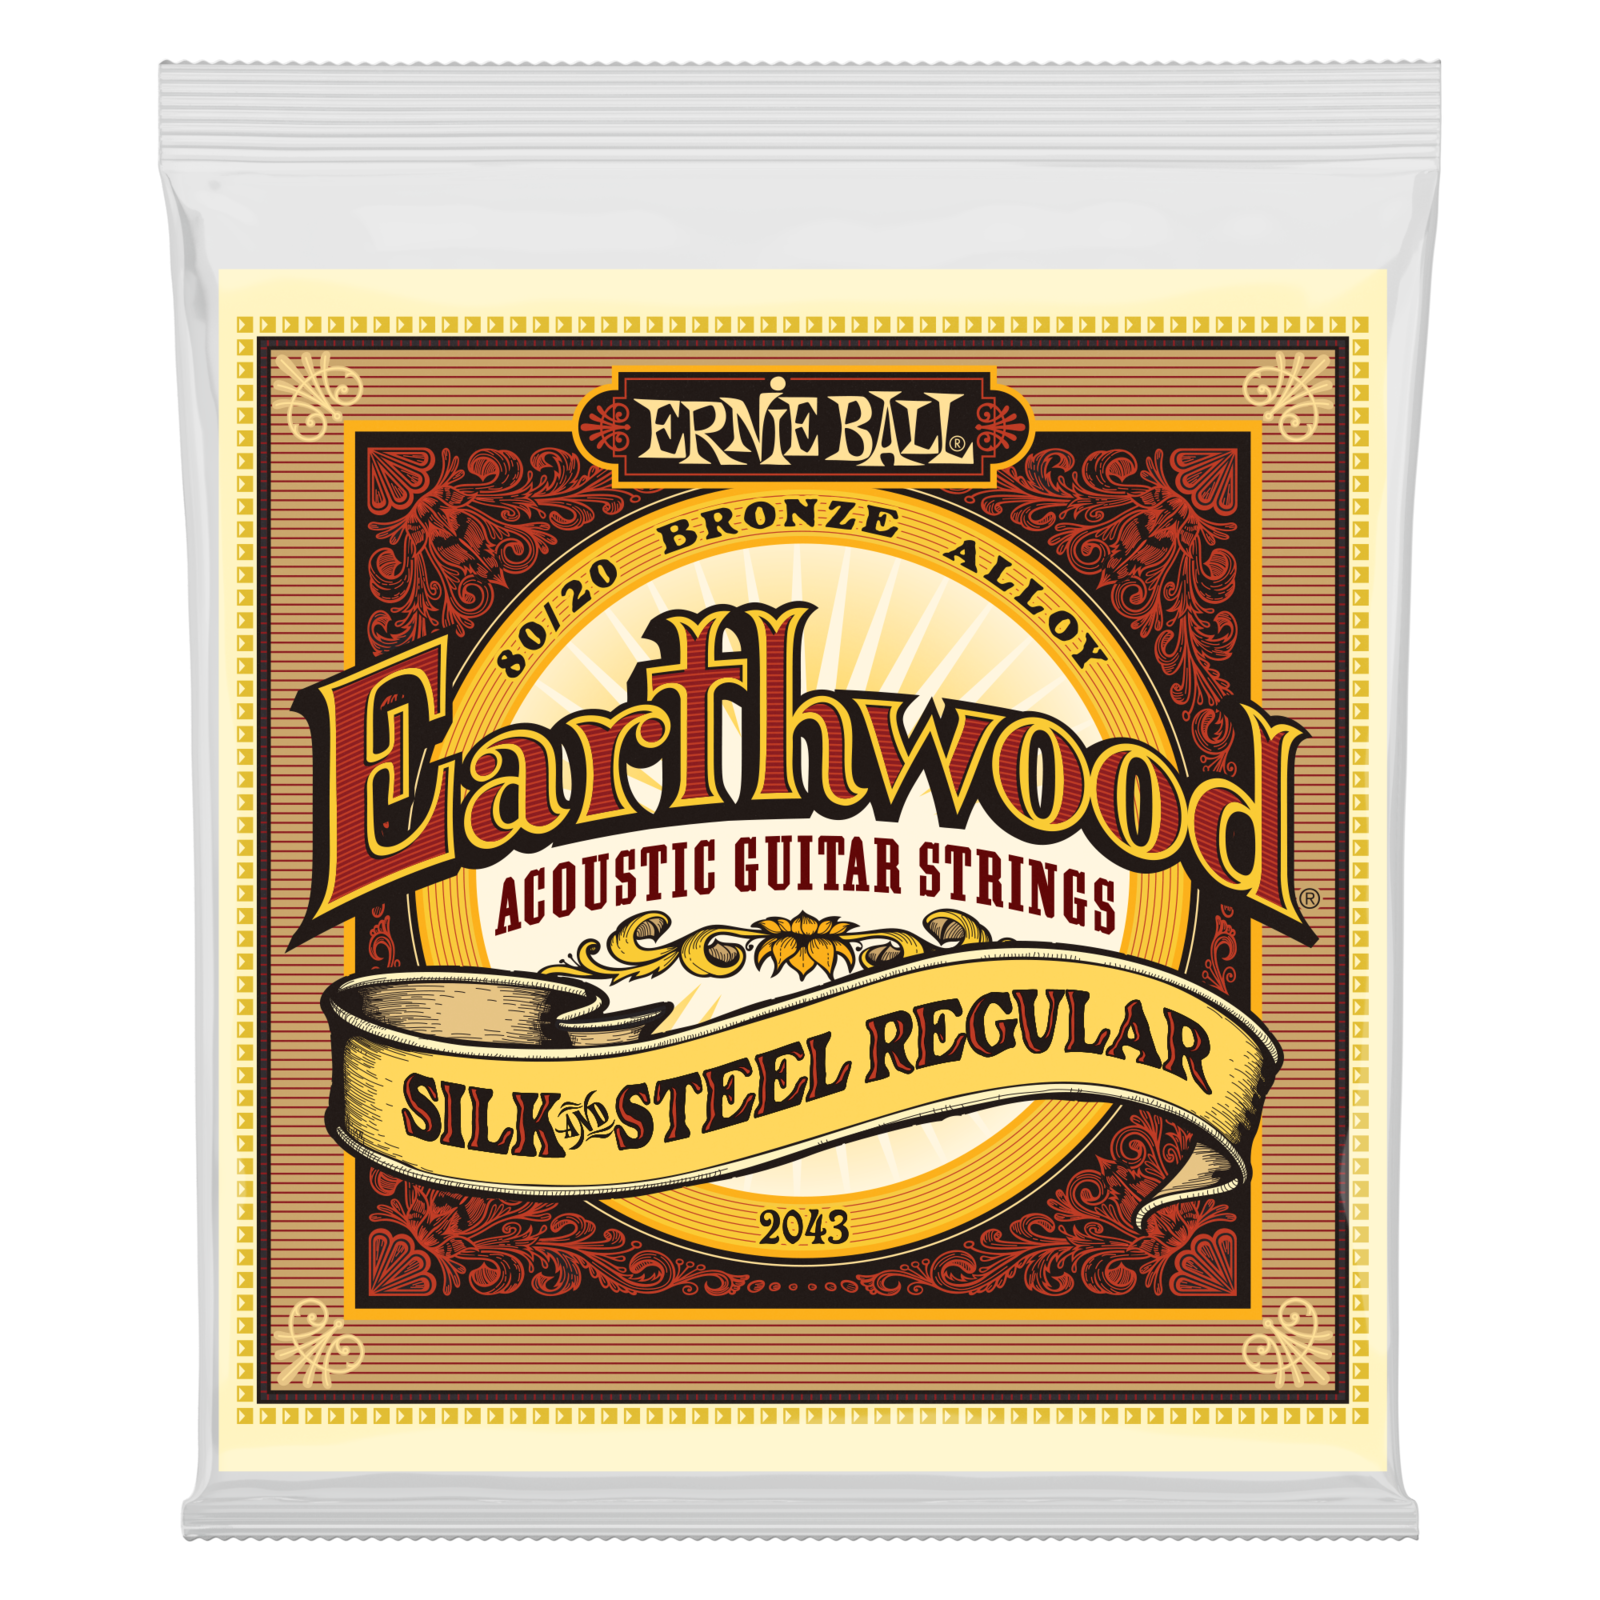 Struny pro akustickou kytaru Ernie Ball 2043 Earthwood Silk & Steel